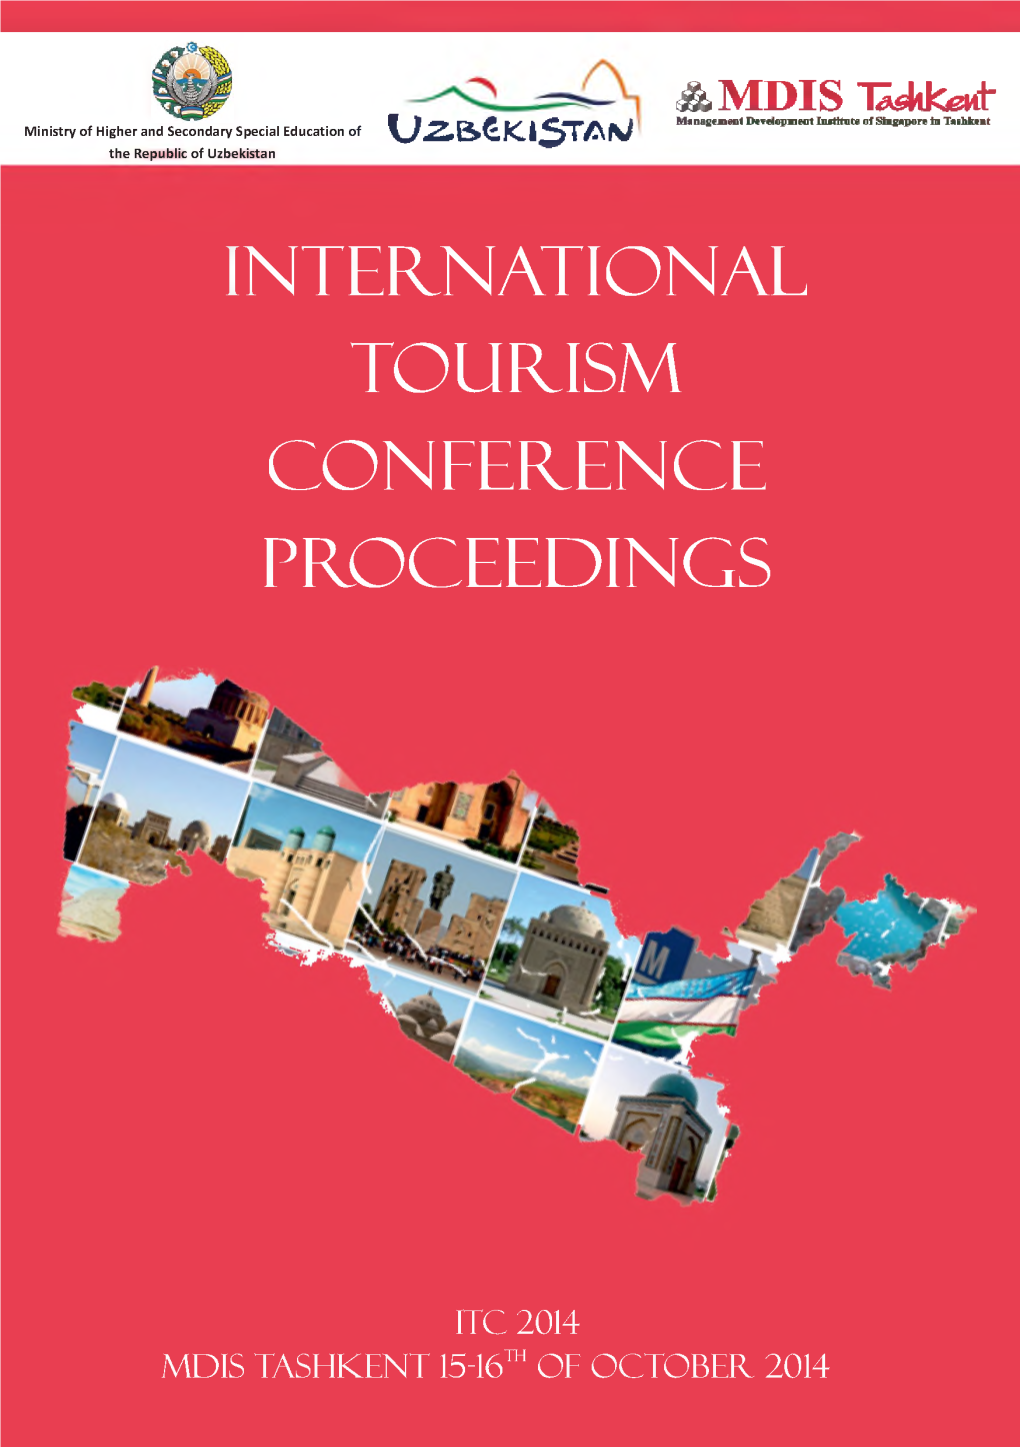 INTERNATIONAL TOURISM Conference PROCEEDINGS